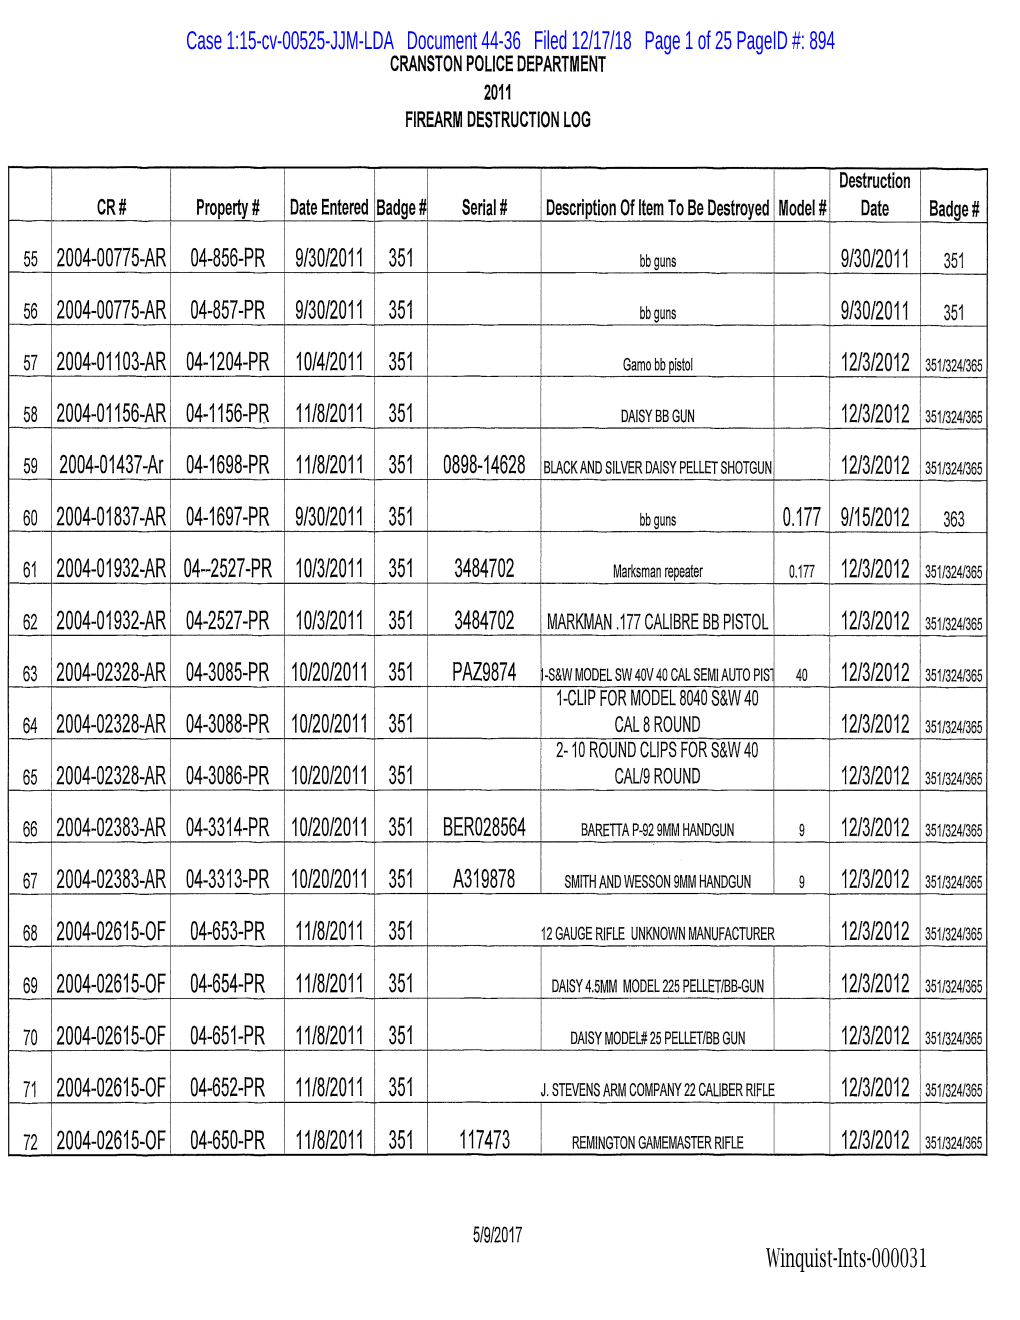 Winquist-Ints-000031 Case 1:15-Cv-00525-JJM-LDA Document 44-36 Filed 12/17/18 Page 2 of 25 Pageid #: 895 CRANSTON POLICE DEPARTMENT 2011 FIREARM DESTRUCTION LOG